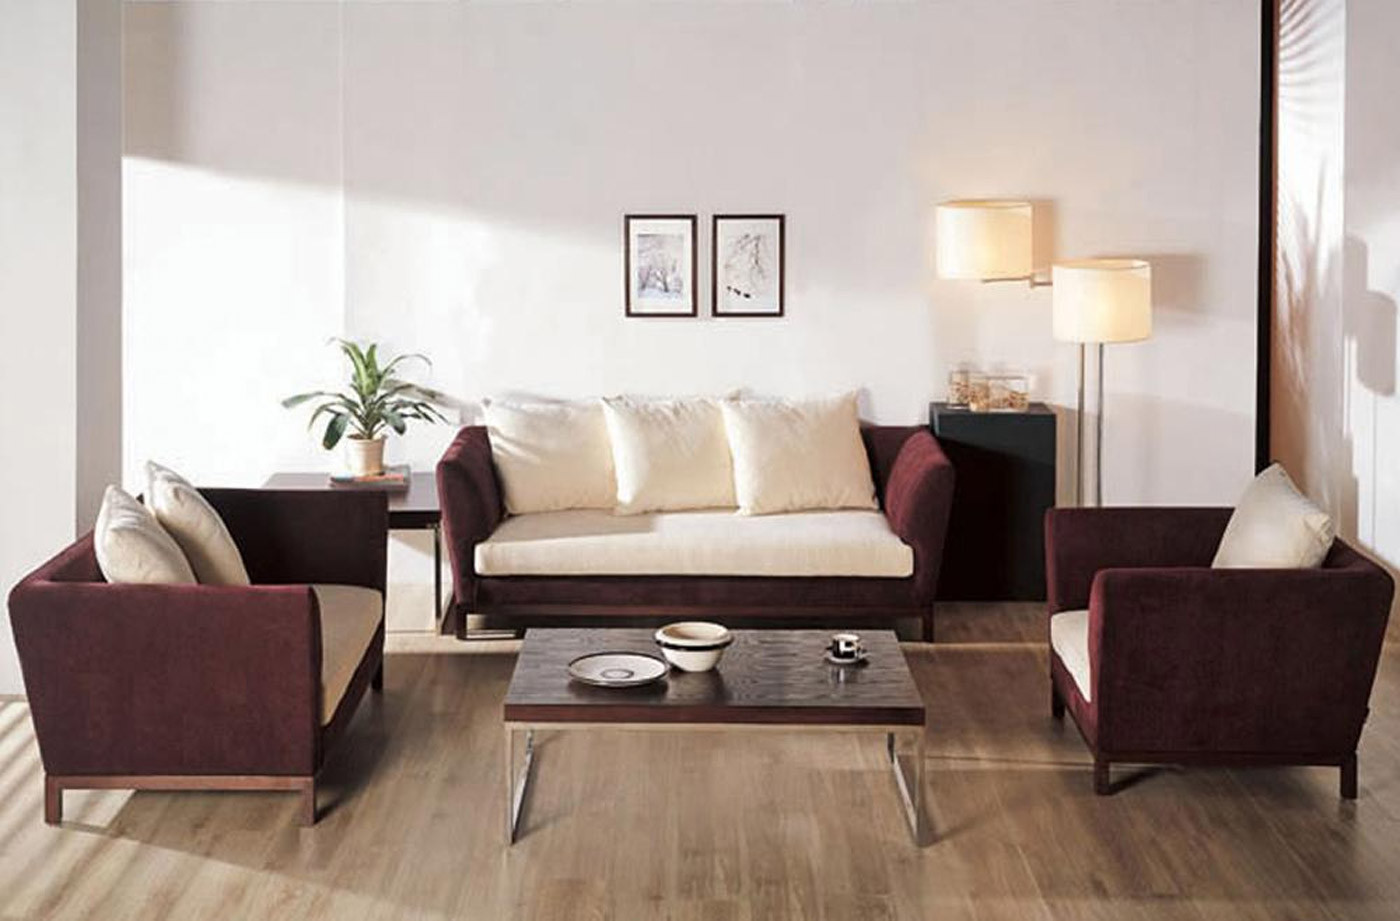 Minimalist Living Room Furniture
 Living Room Furniture Wood Trim Zion Star